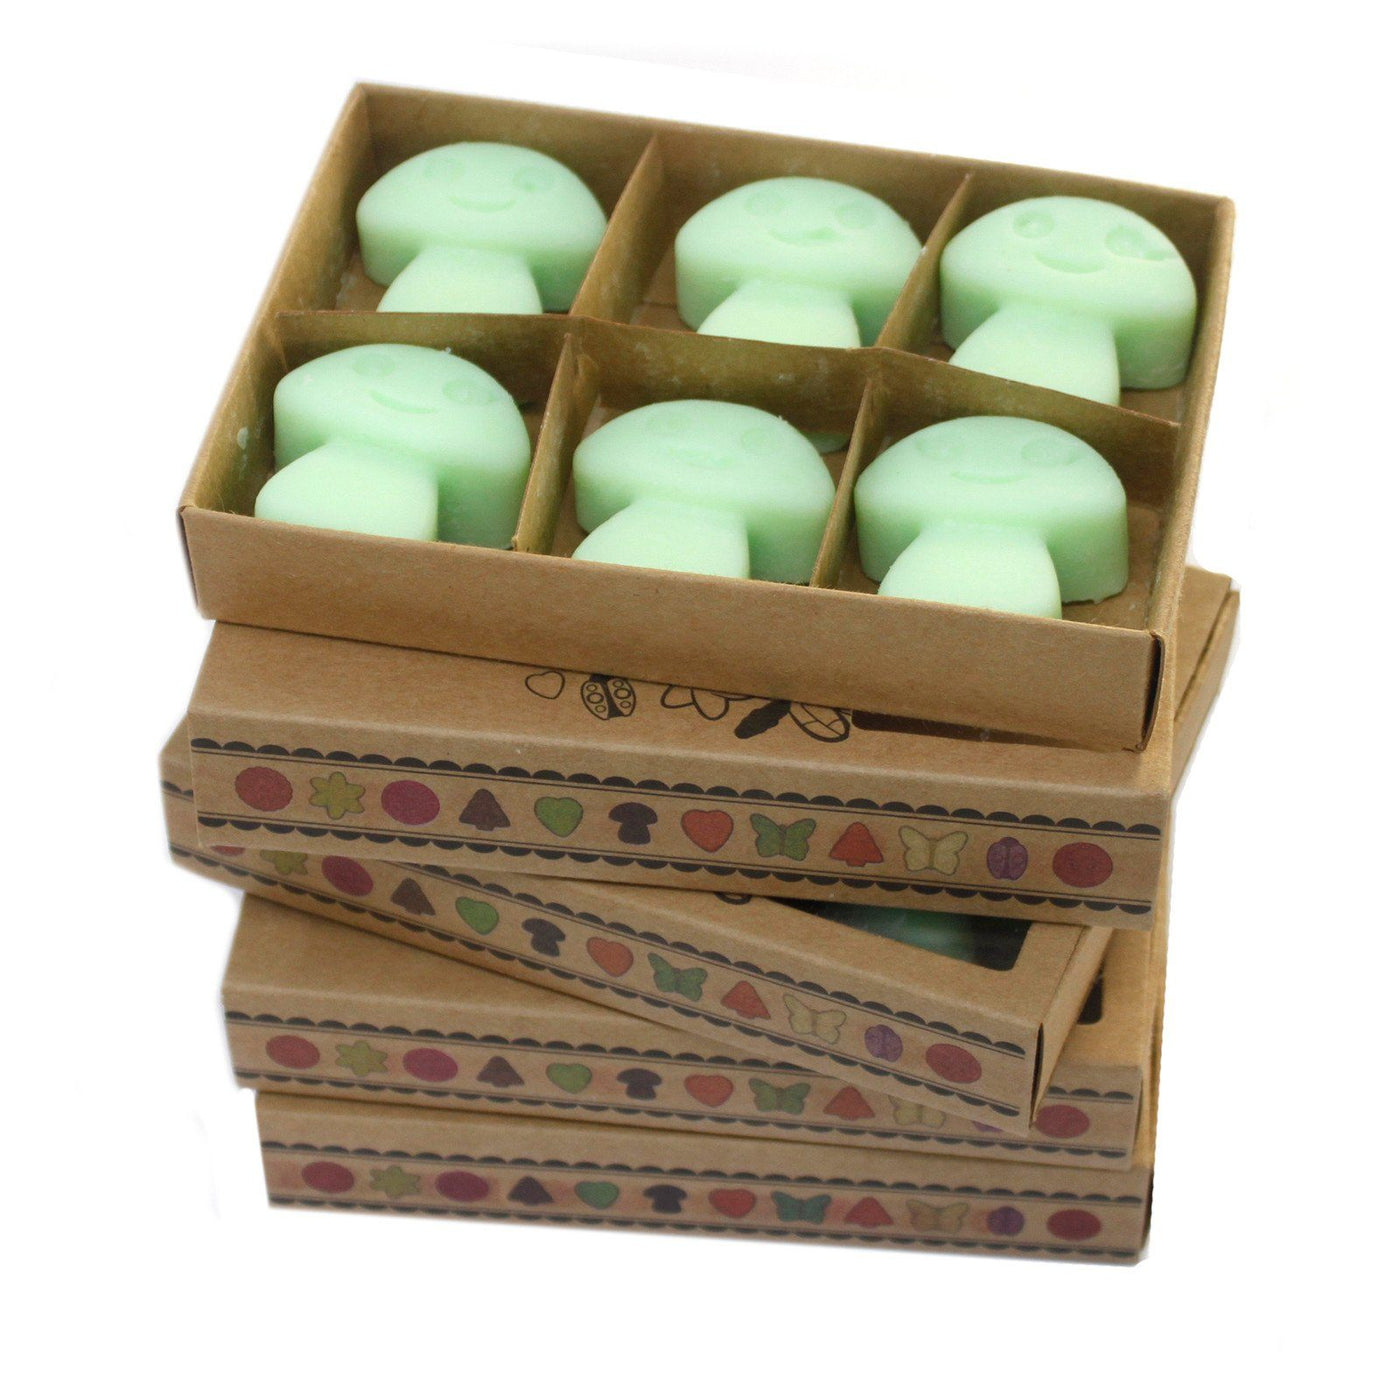 Box of 6 Green Toadstool Fragranced Soy Wax Melts - Liquorice.